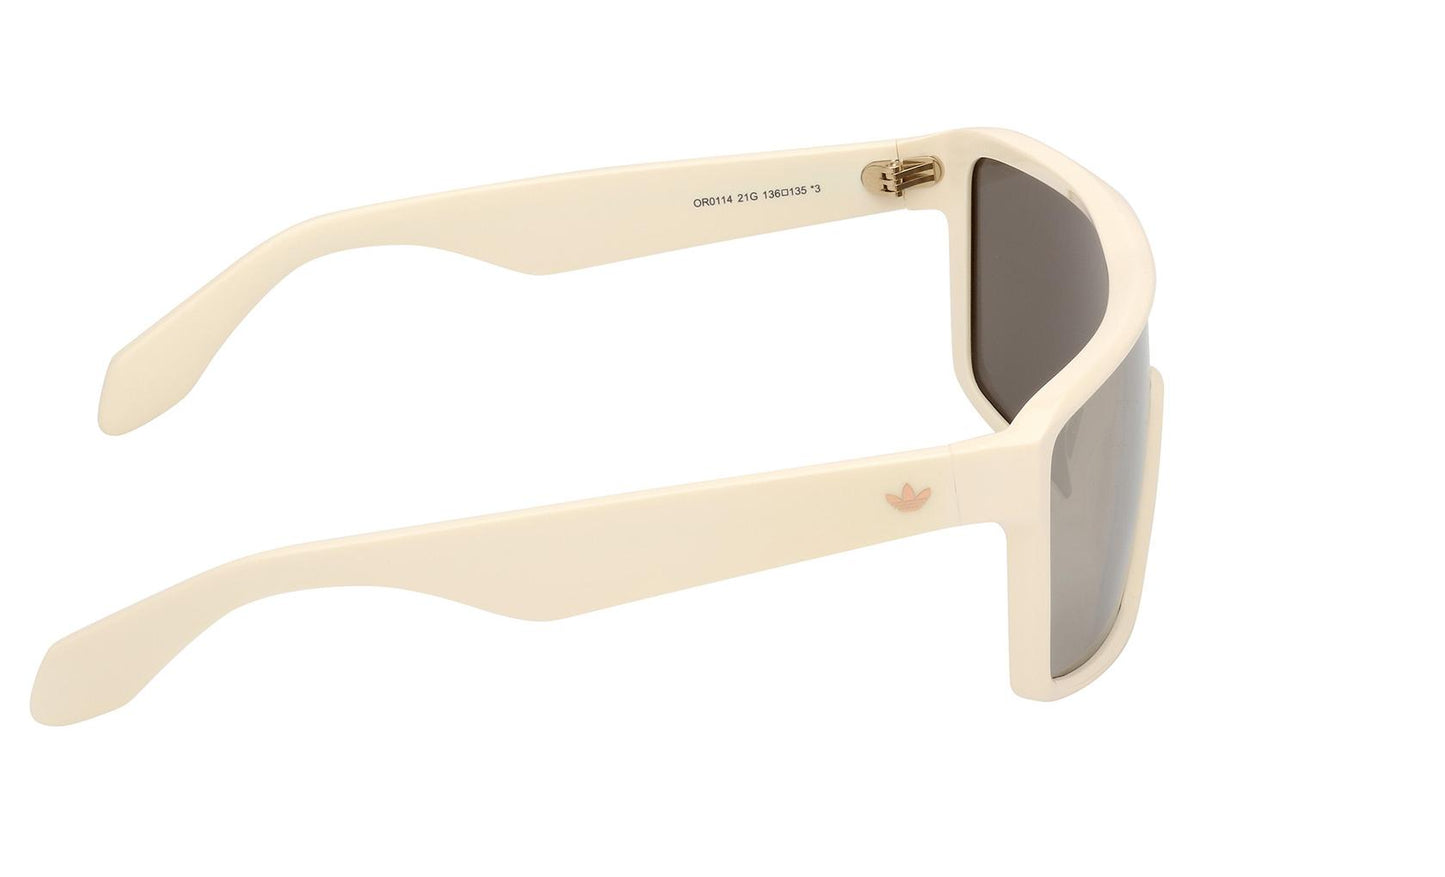 Adidas Originals Sunglasses OR0114 21G